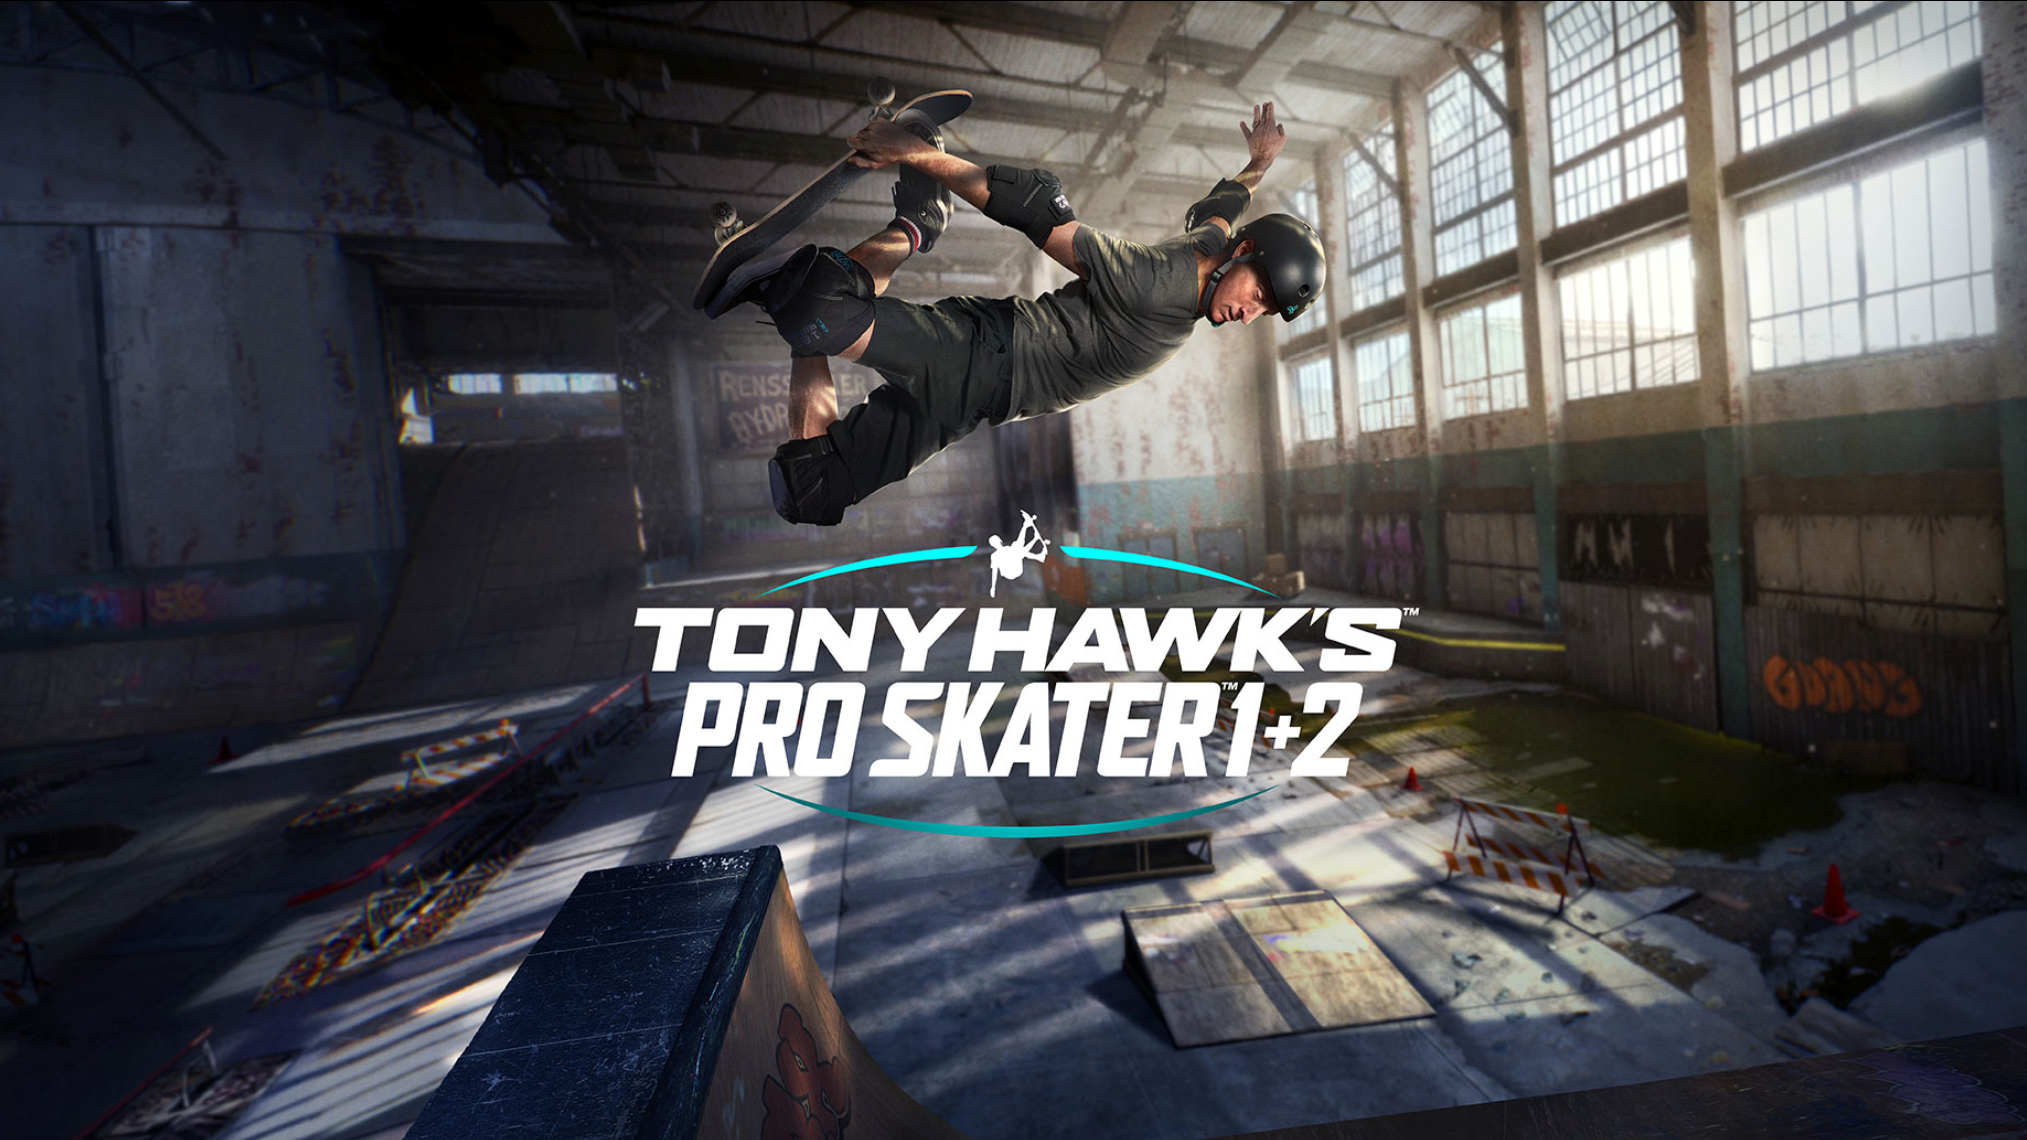 Tony Hawk's Pro Skater remaster